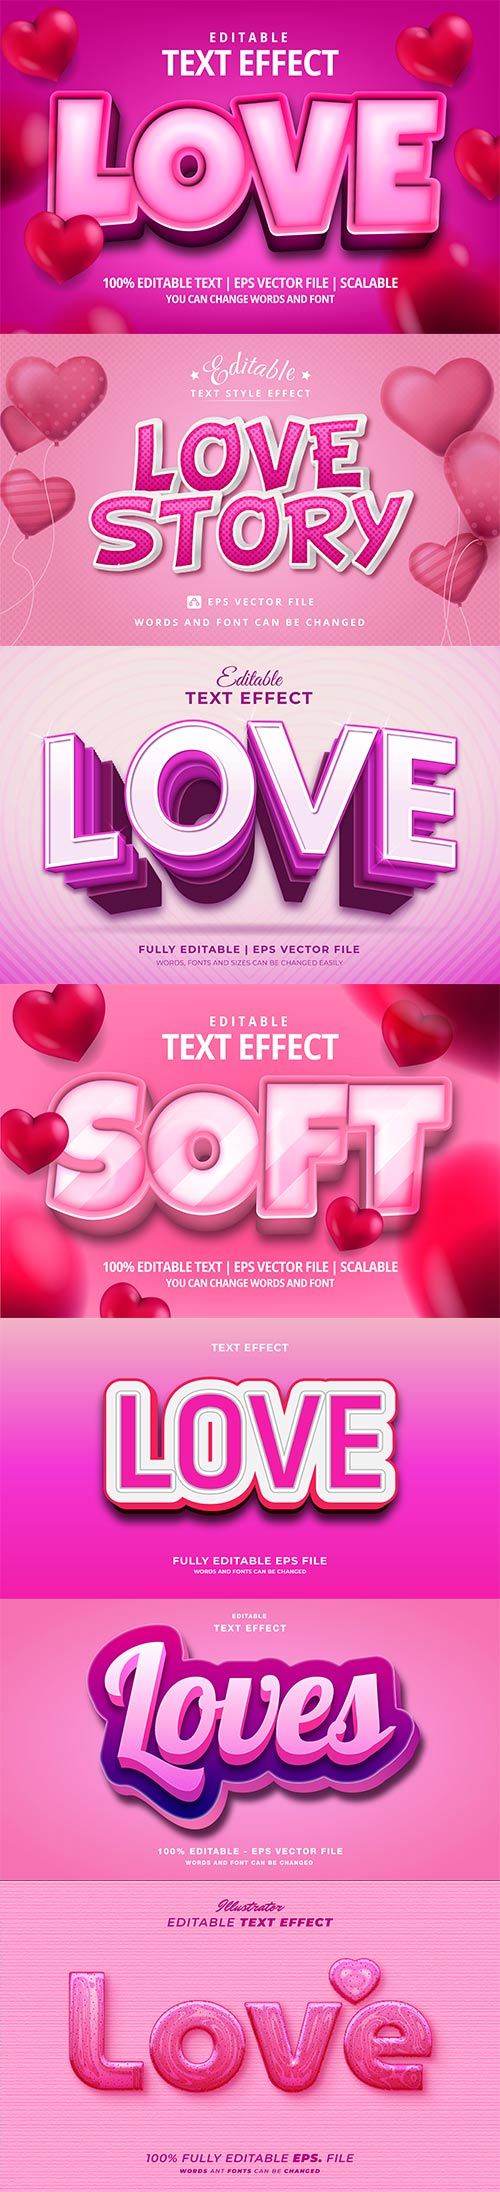 3d editable text style effect vector vol 900